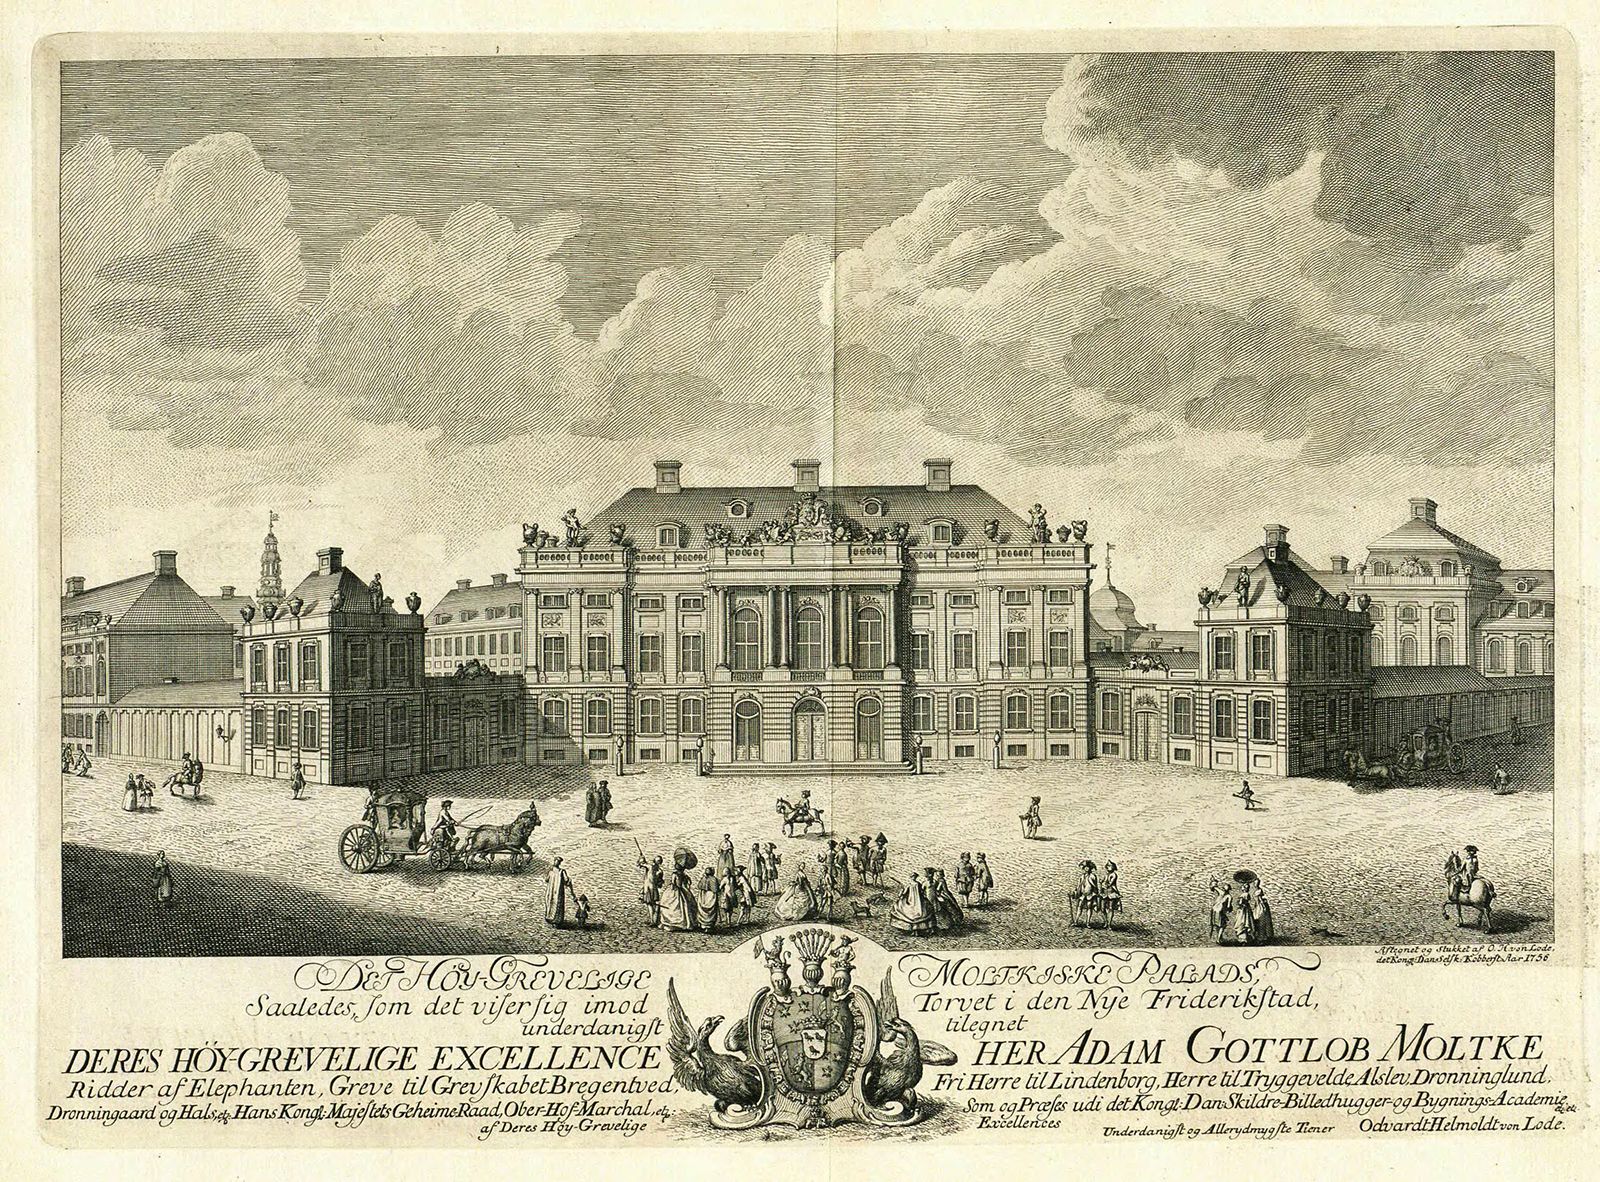 Illustration of Moltke's Palace at Amelienborg by Odvardt Helmoldt de Lode, 1756